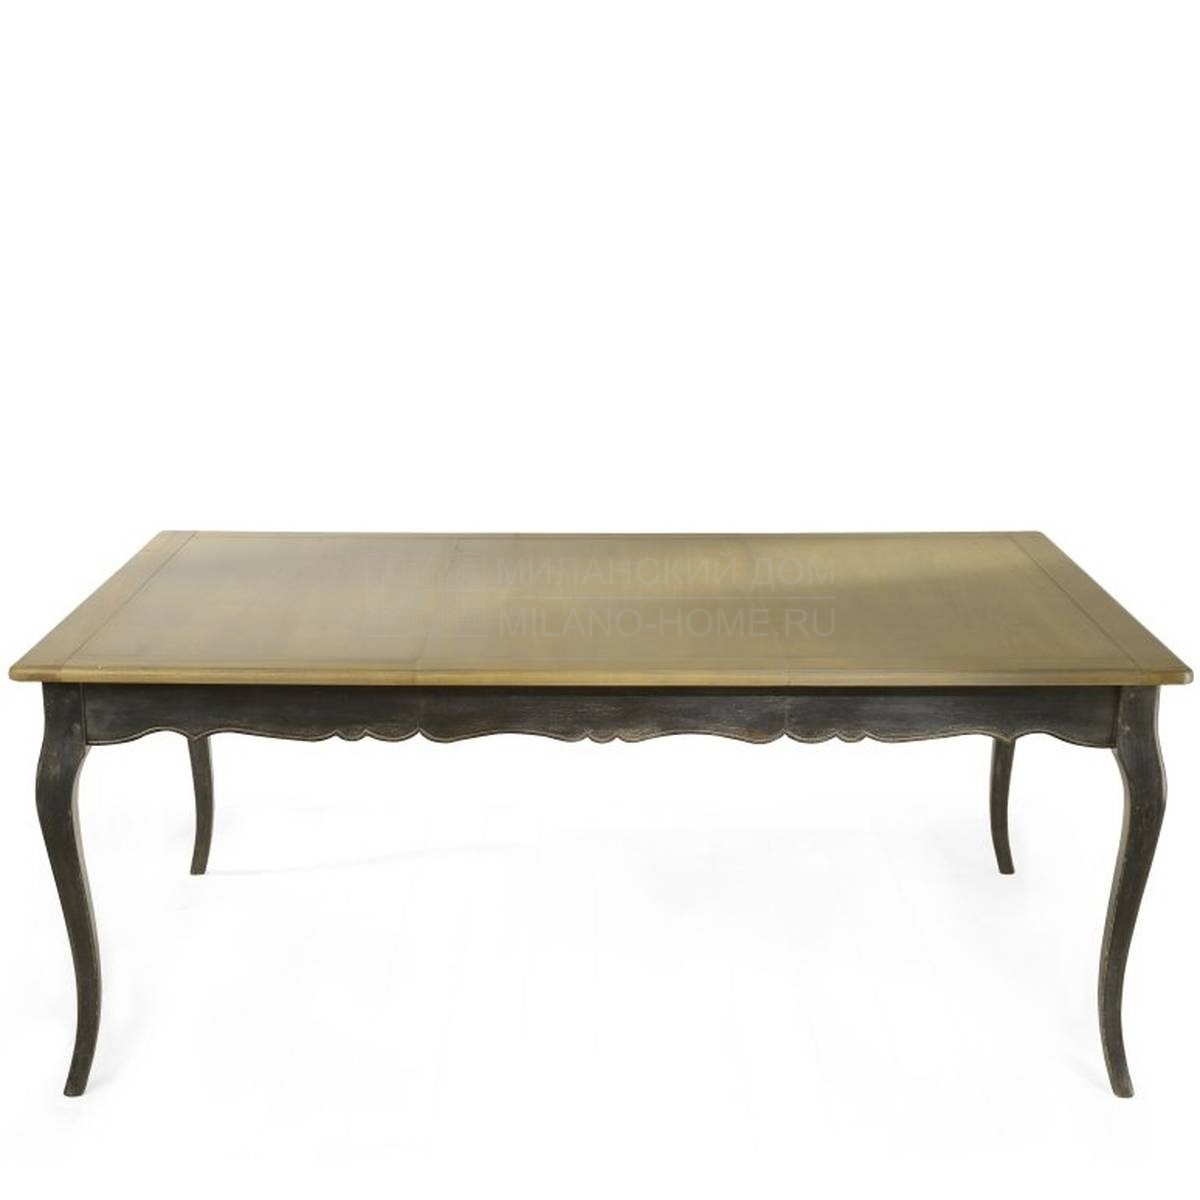 Обеденный стол Citrus square dining table extendable из Италии фабрики MARIONI